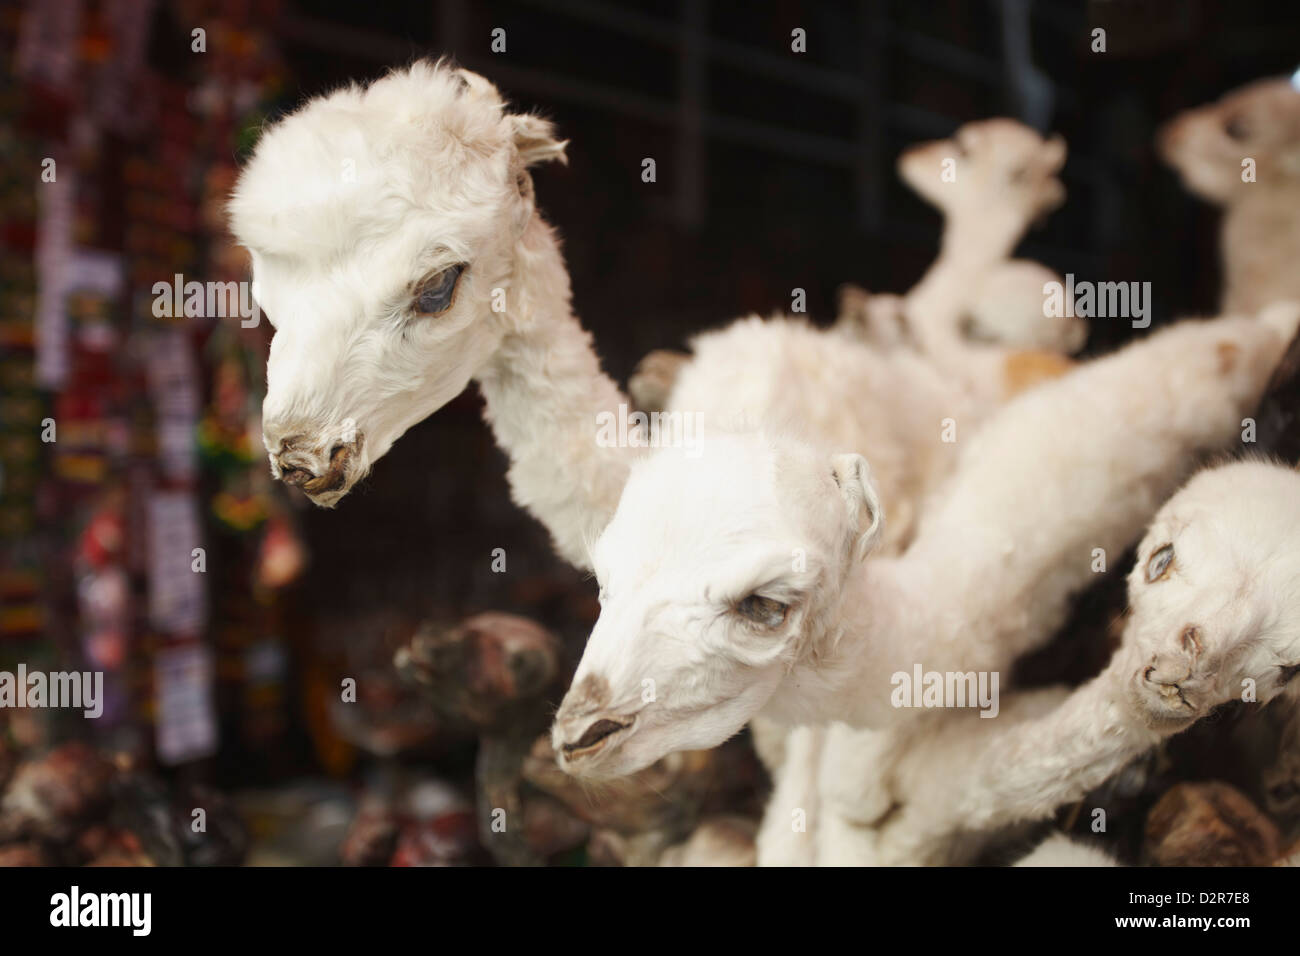 Stuffed baby llamas in Witches' Market, La Paz, Bolivia, South America Stock Photo